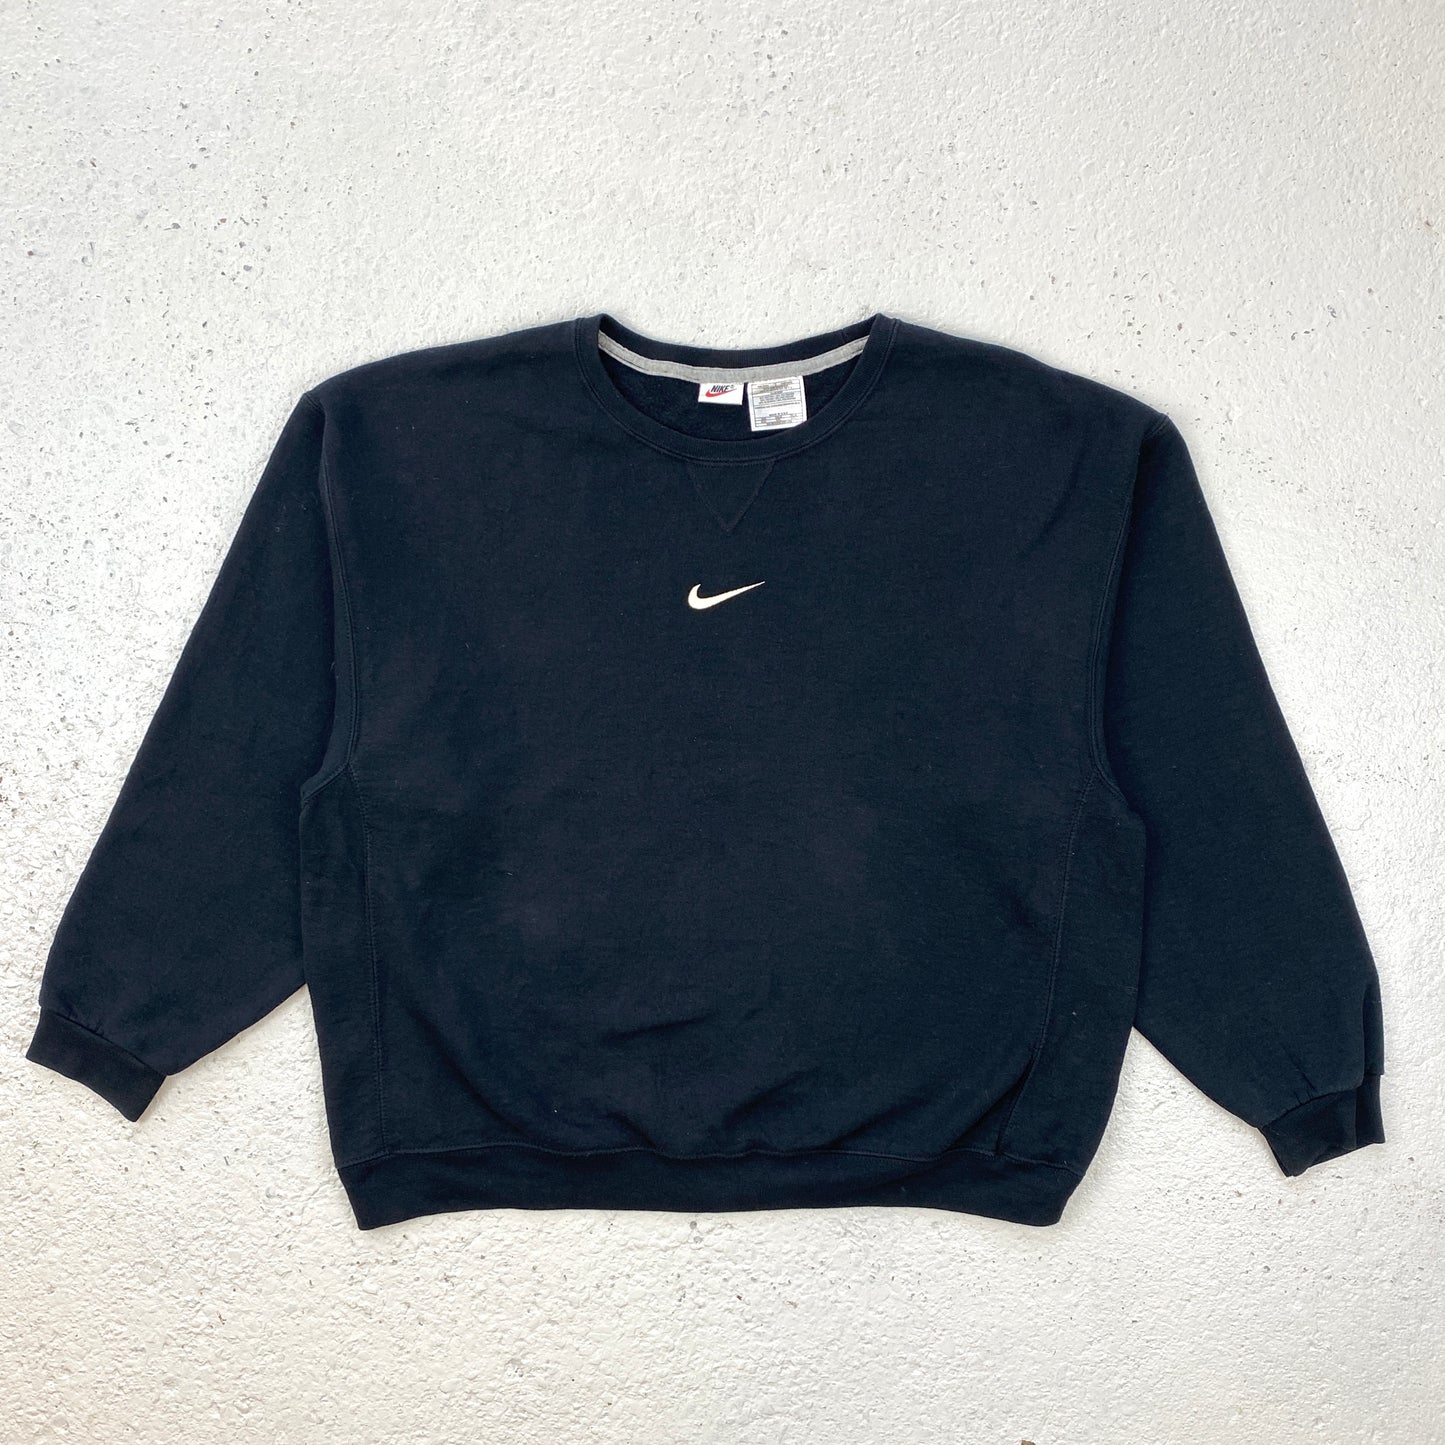 Nike RARE center swoosh sweater (XL)